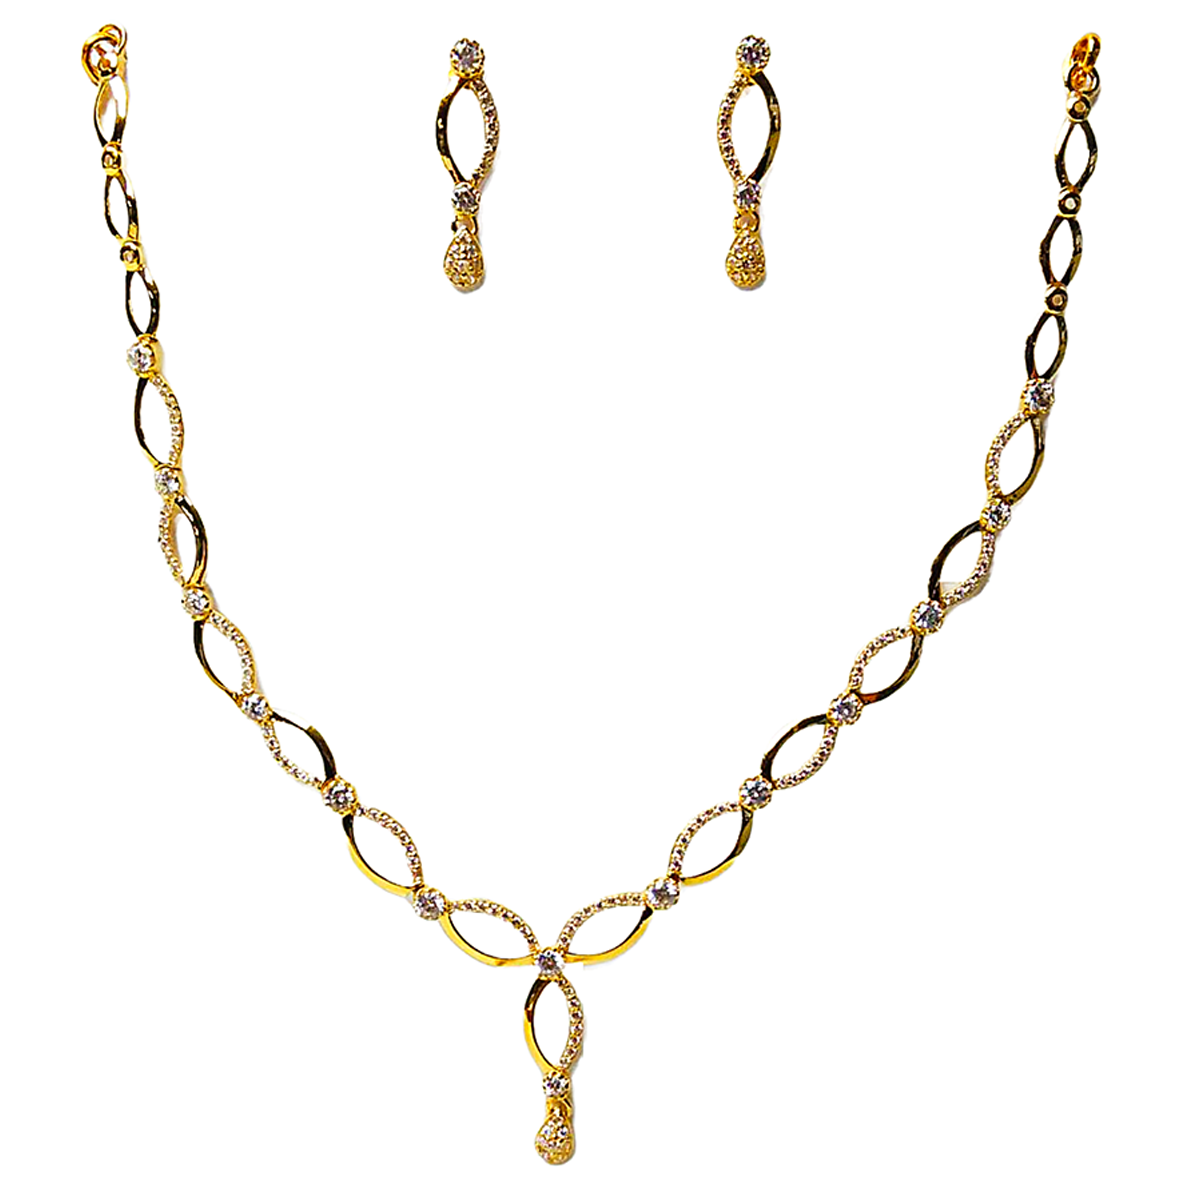 Nachiar gold necklace